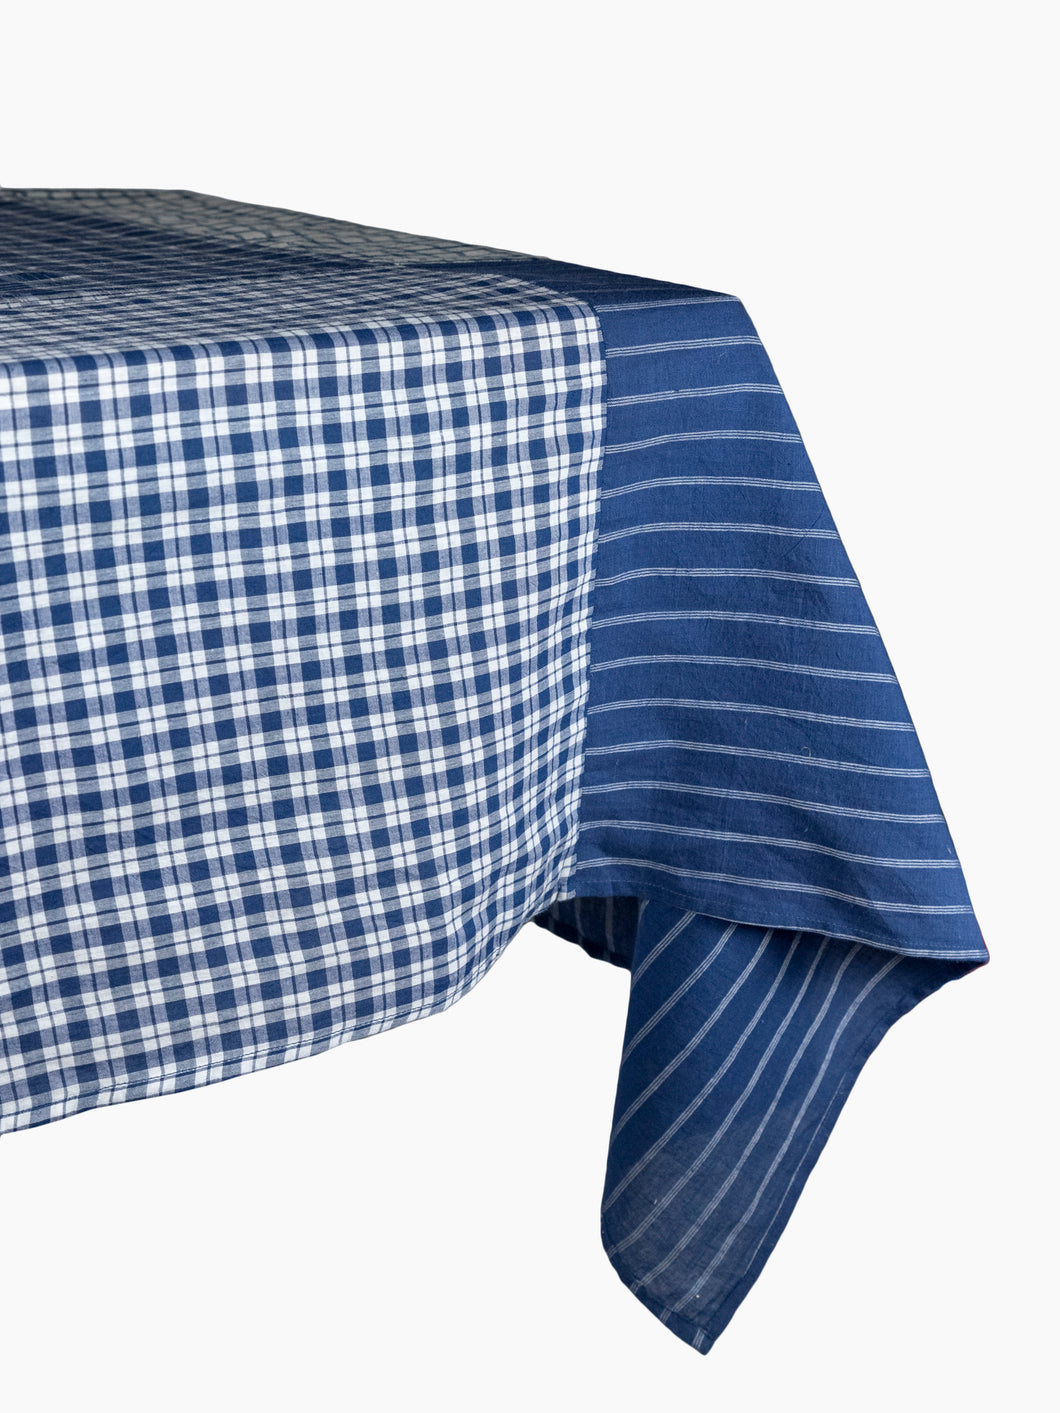 Blue Patchwork Tablecloth